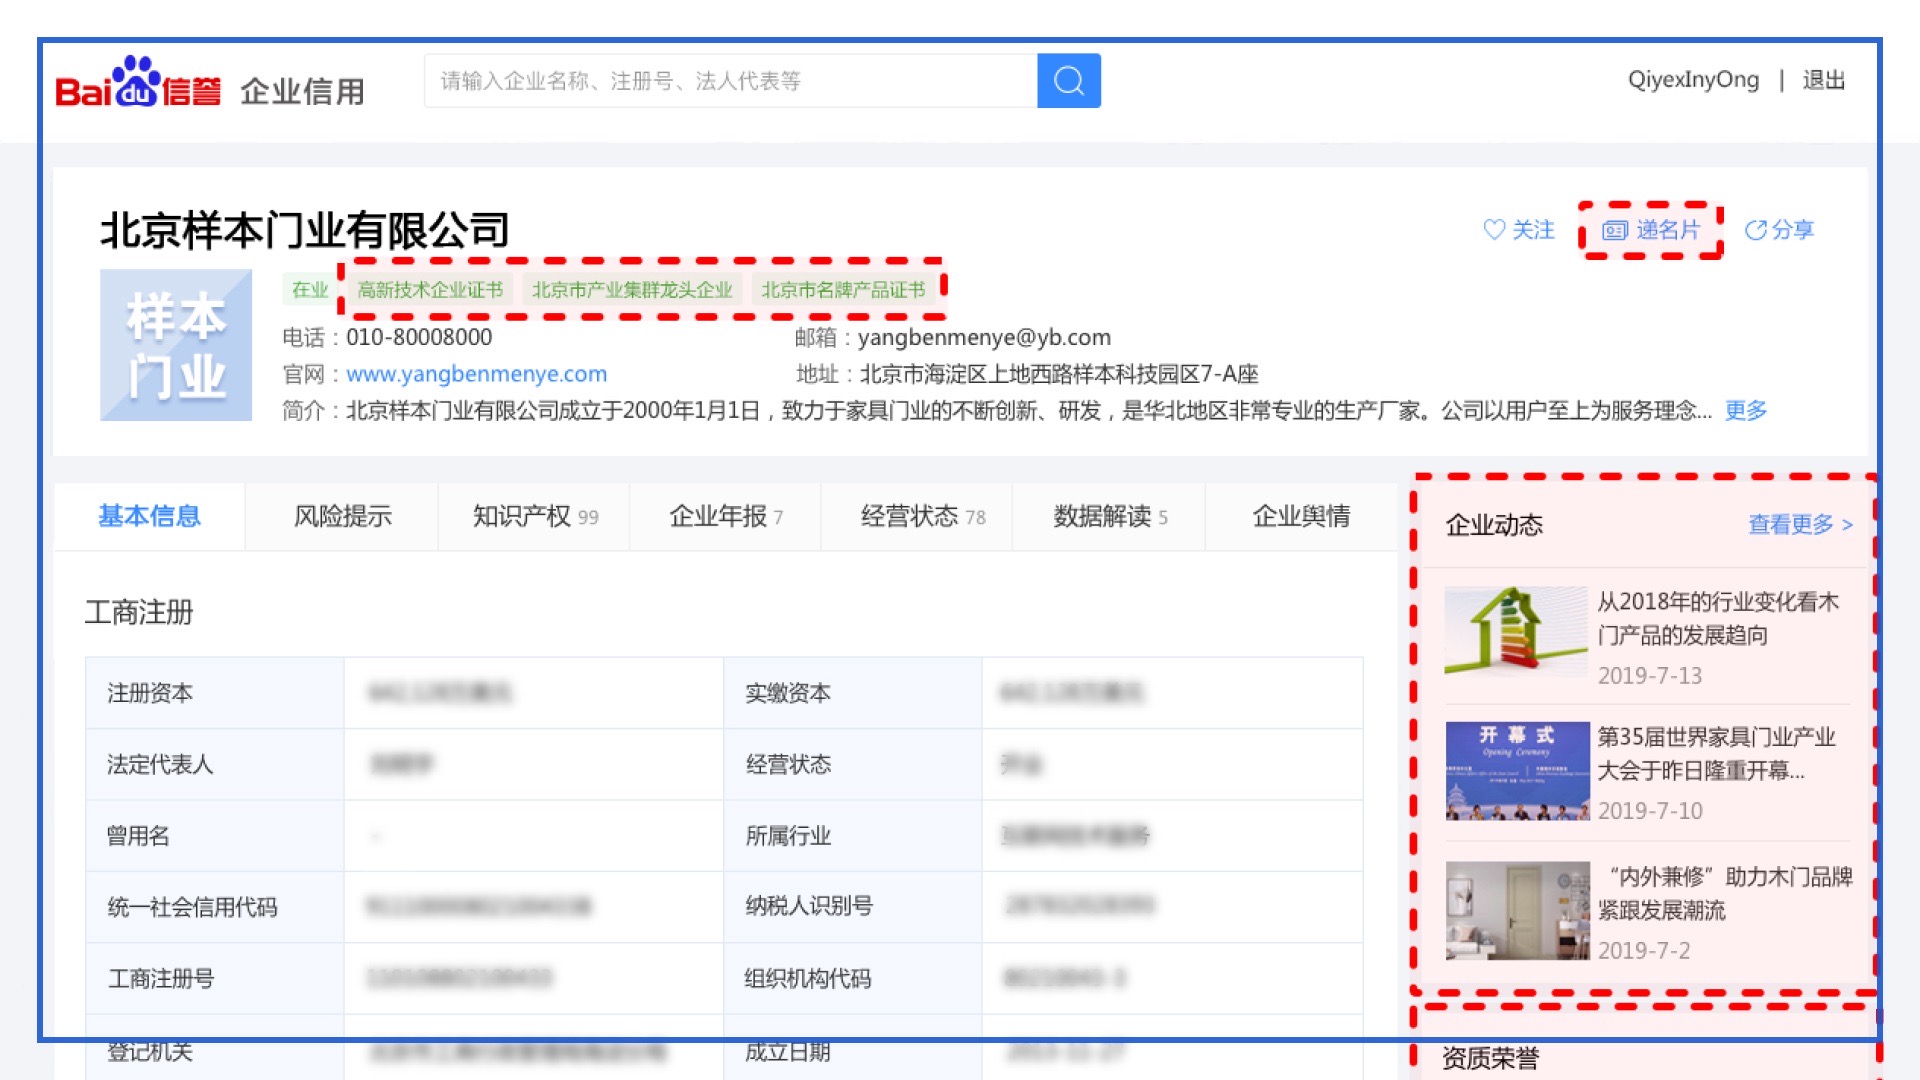 Check company information on Baidu Enterprise Business Card